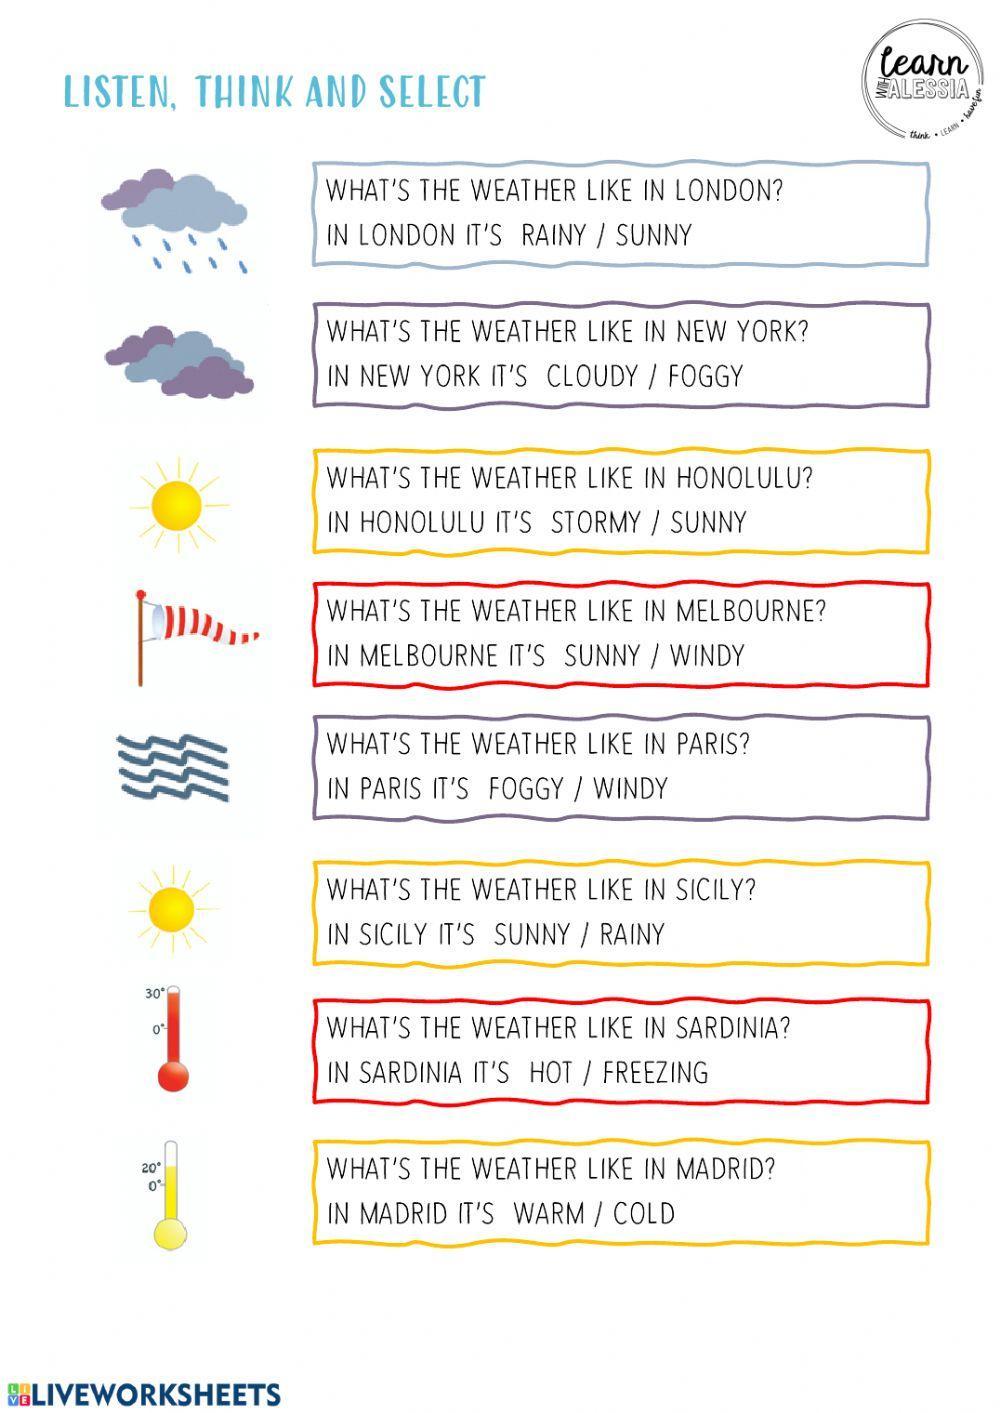 The weather symbols